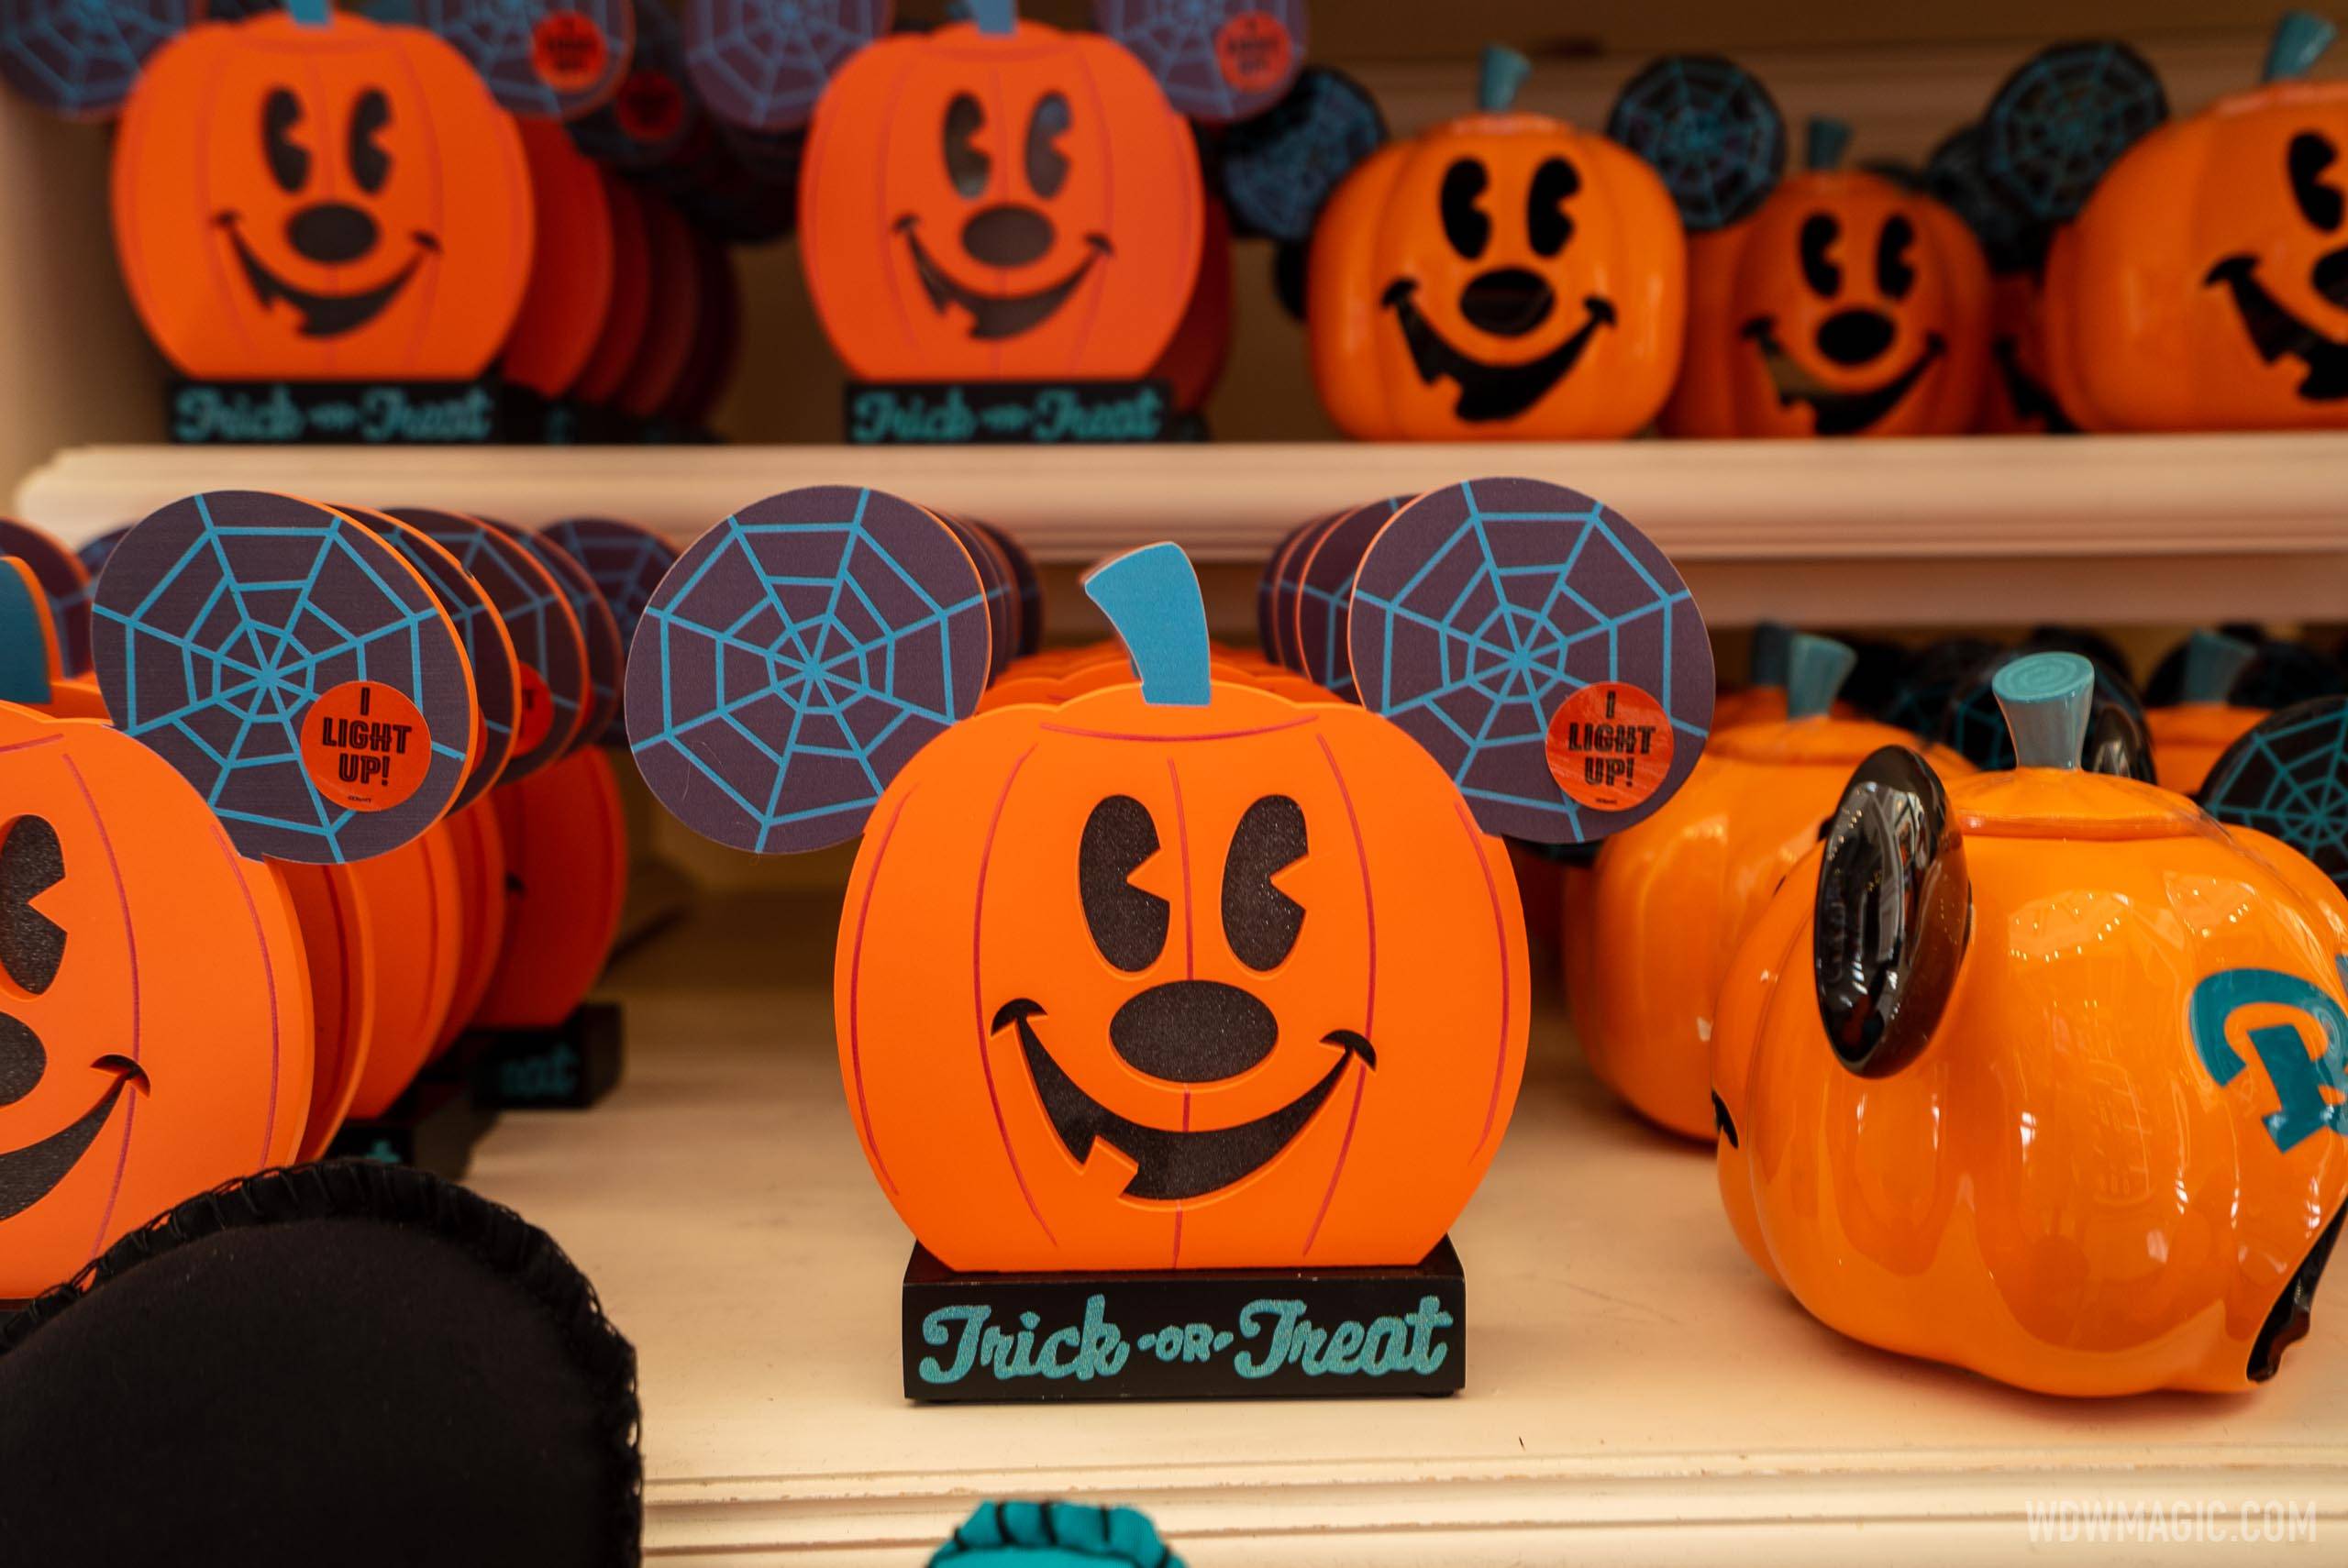 2020 Walt Disney World Halloween merchandise